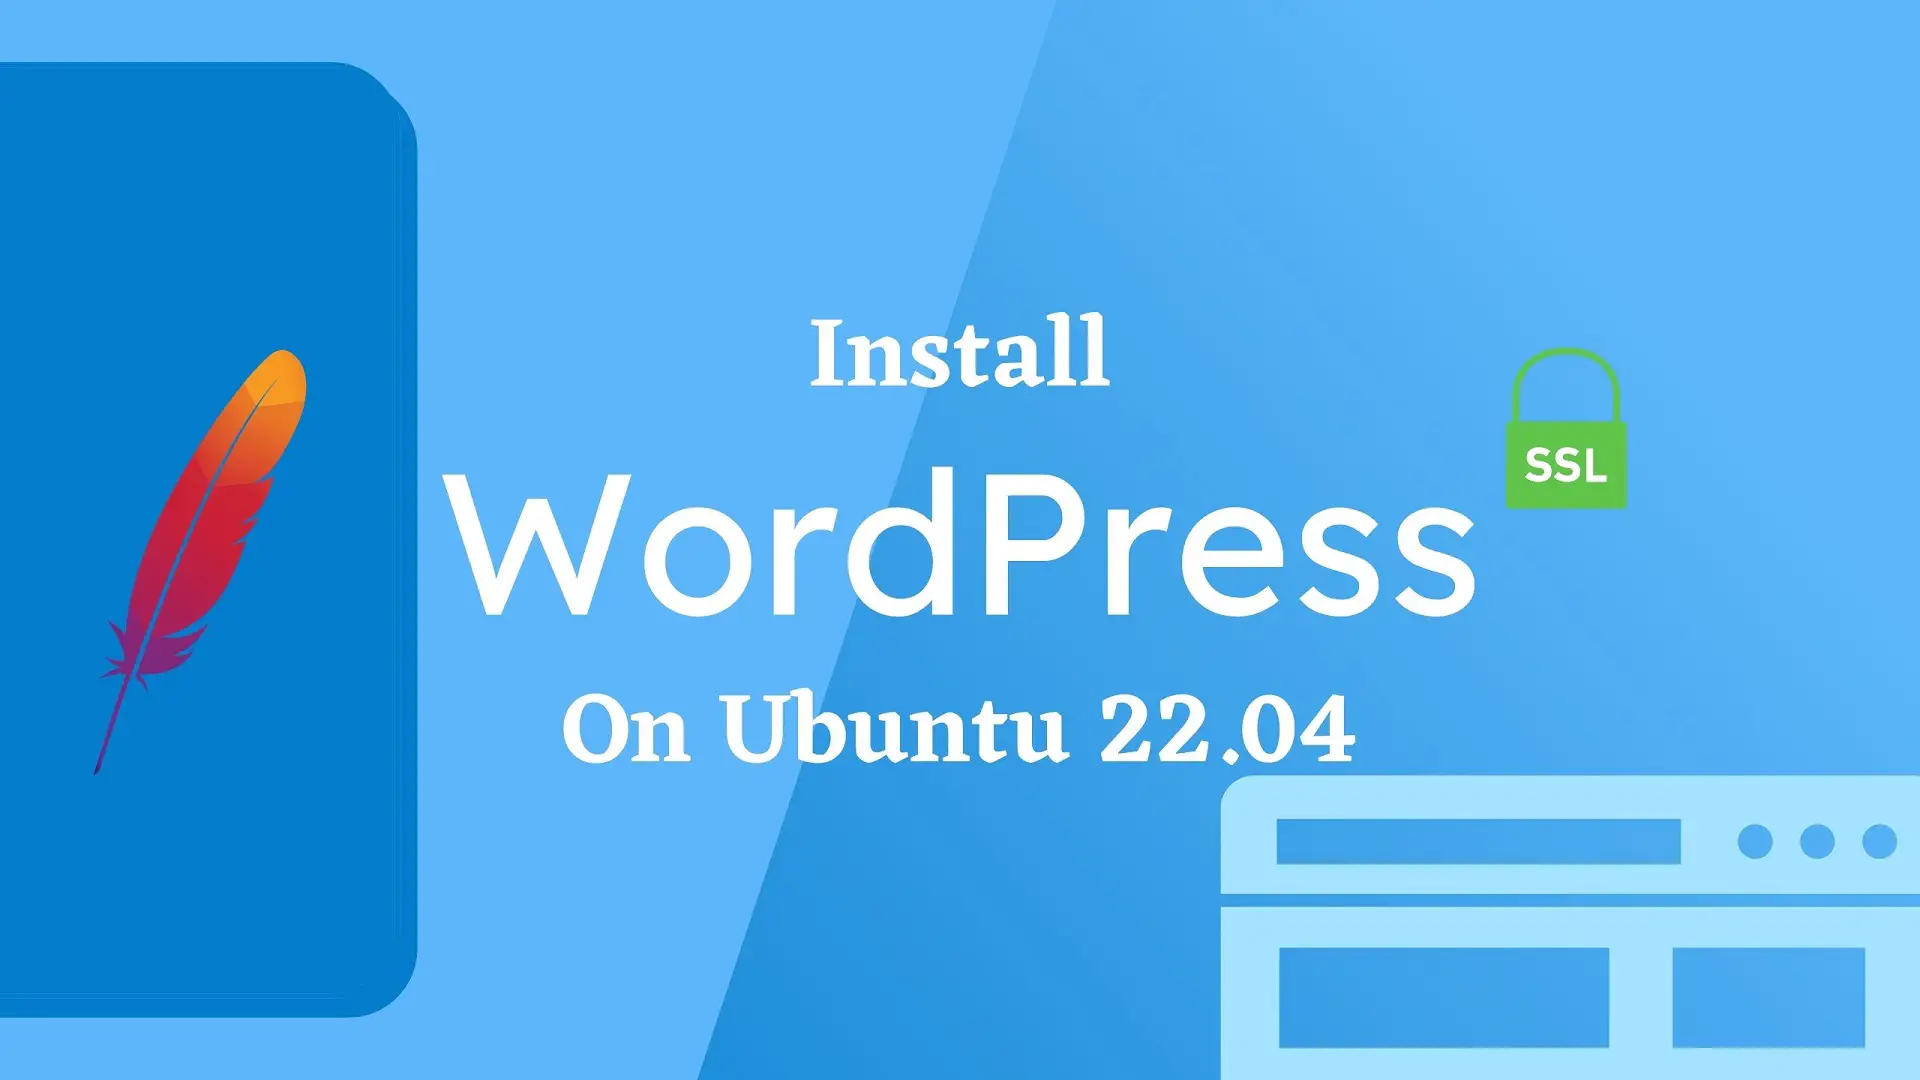 Install WordPress with Apache and Let's Encrypt SSL on Ubuntu 22.04